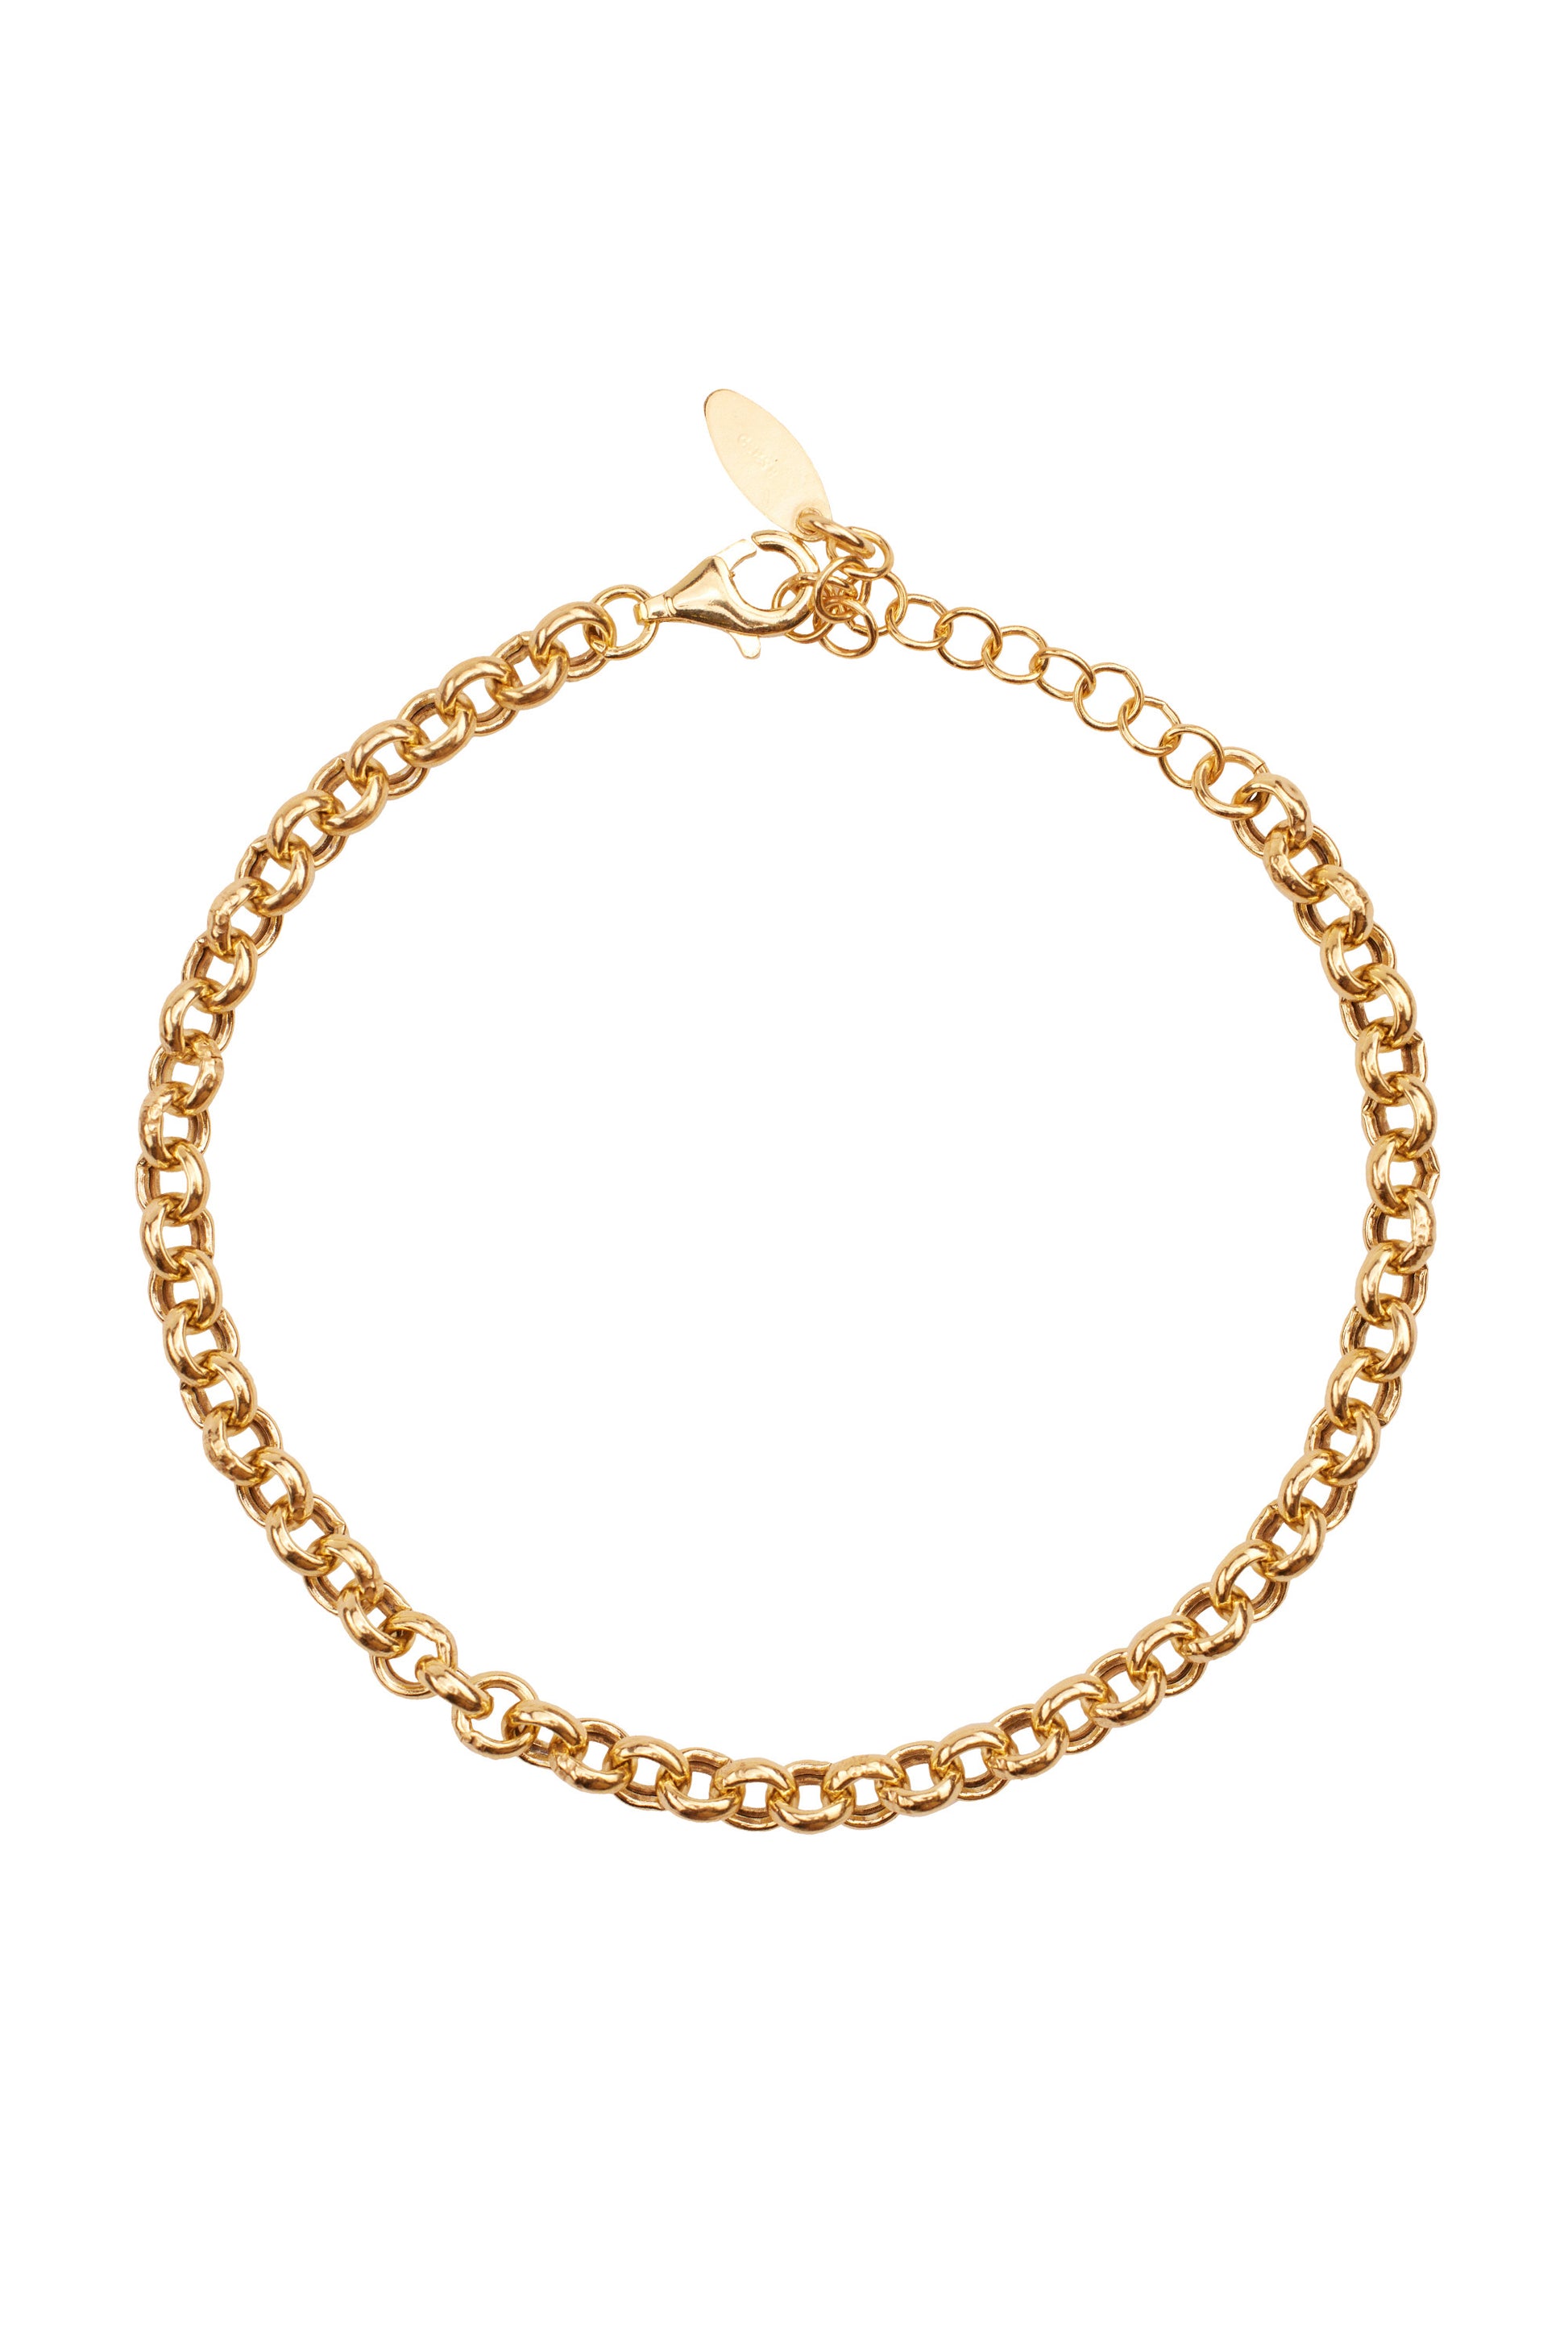 Xzota - Armbanden - Round chain - Gold plated